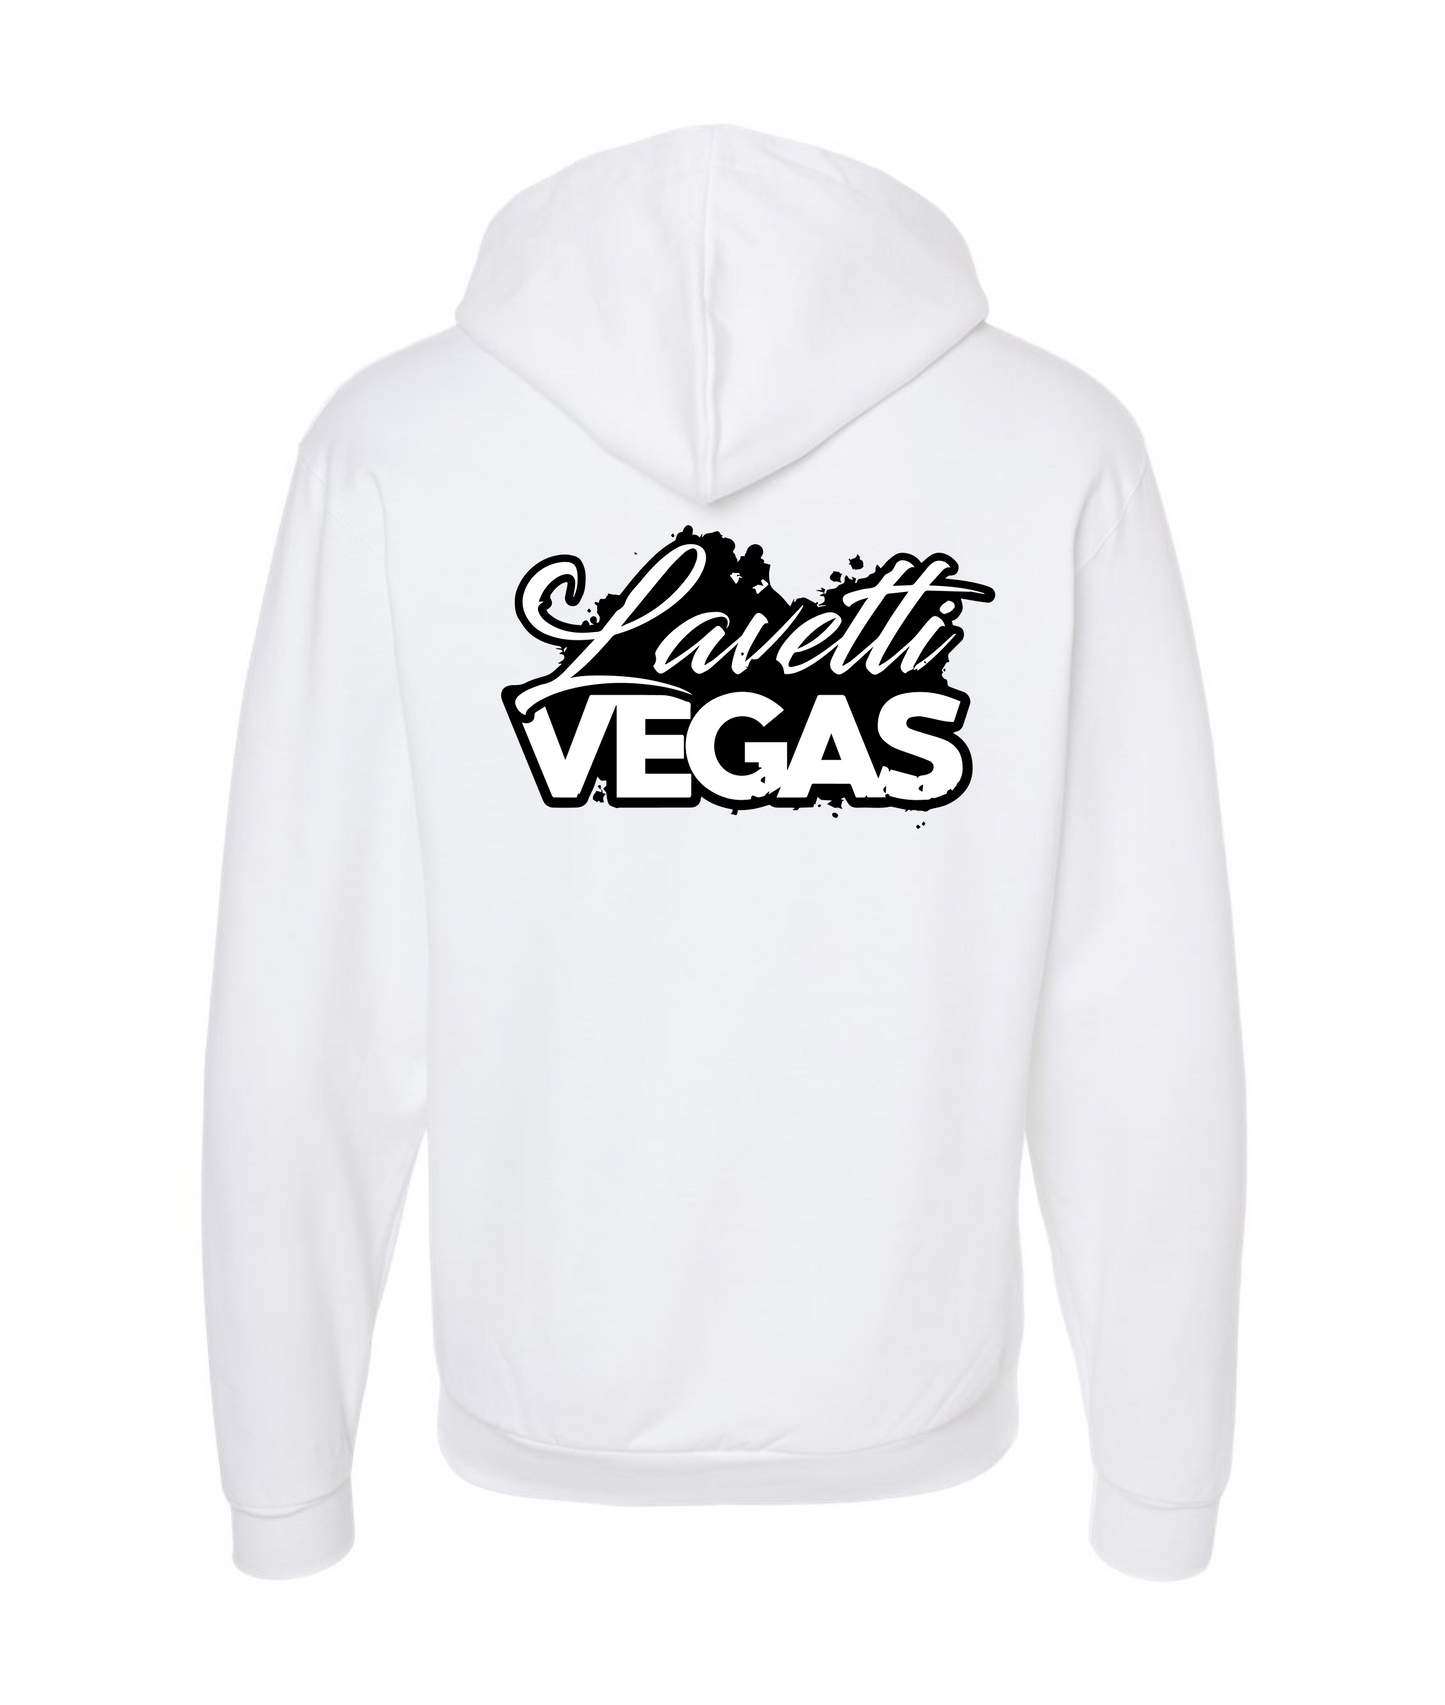 Lavetti Vegas - Logo - White Zip Hoodie